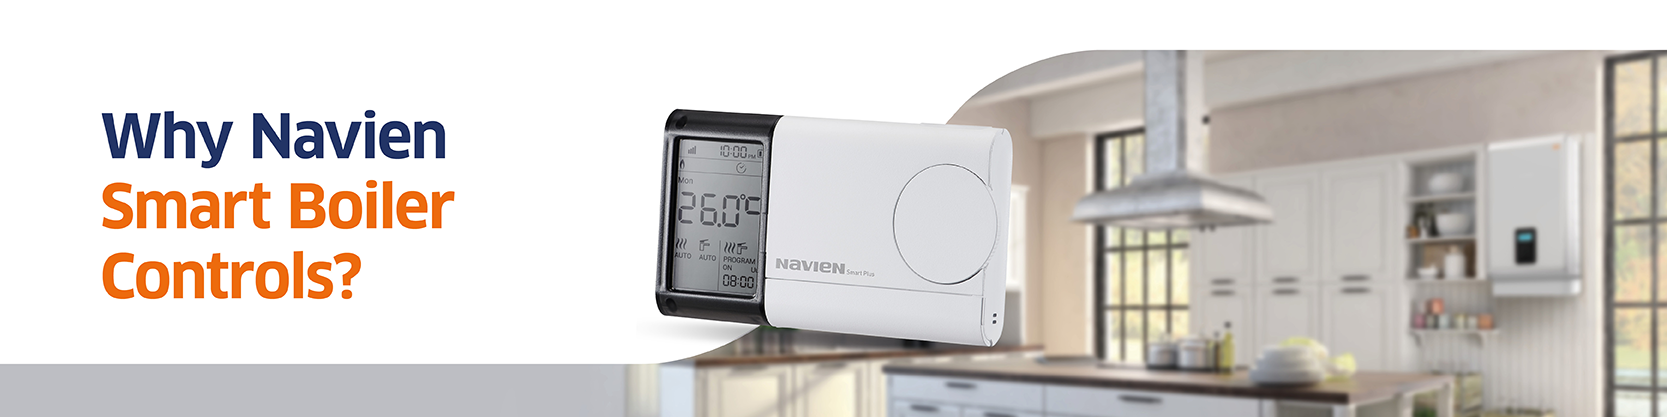 Why Navien smart boiler controls banner